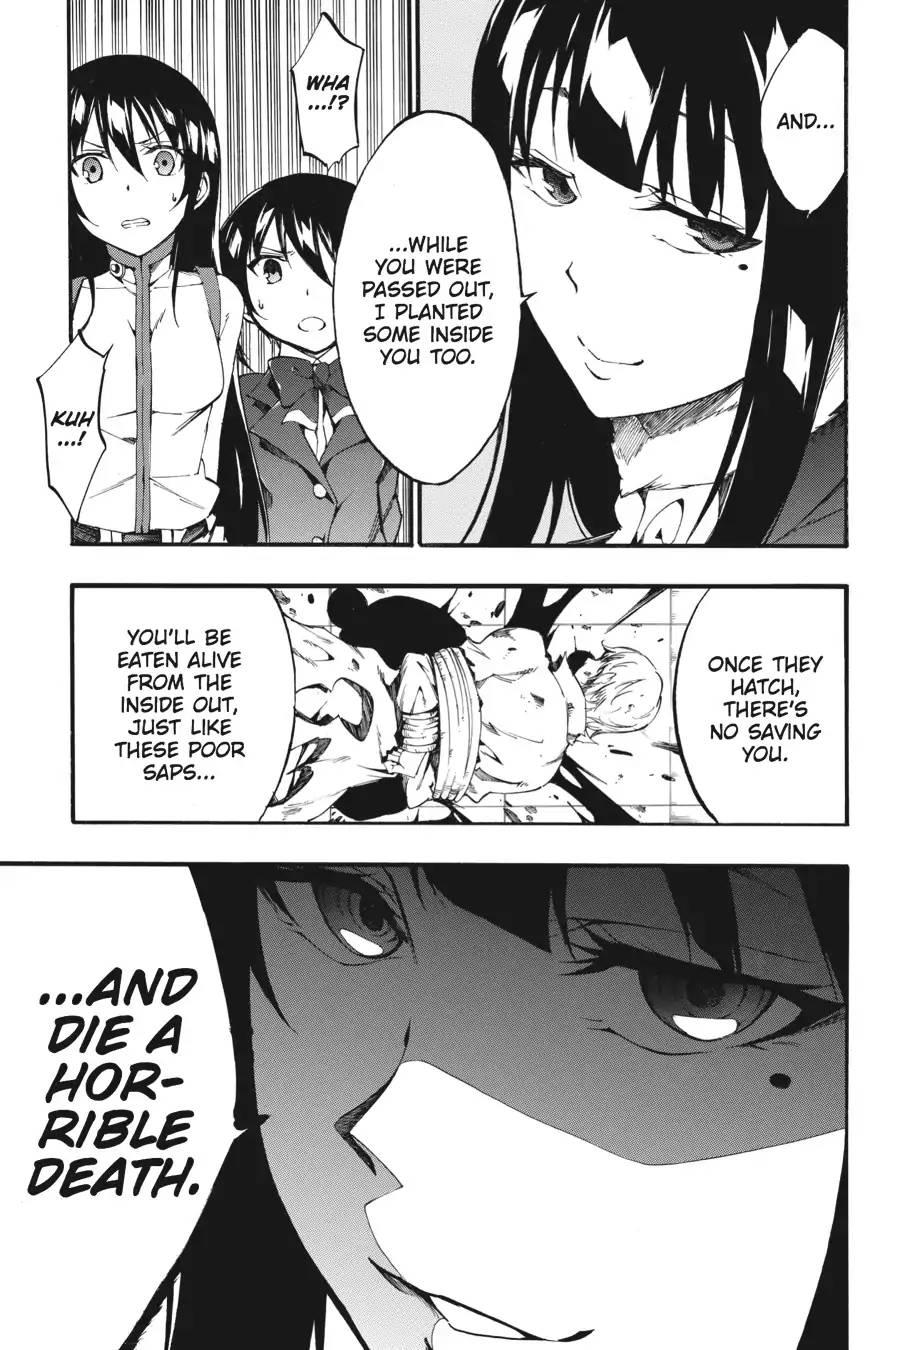 Akame ga KILL! Zero Ch.54 Page 32 - Mangago